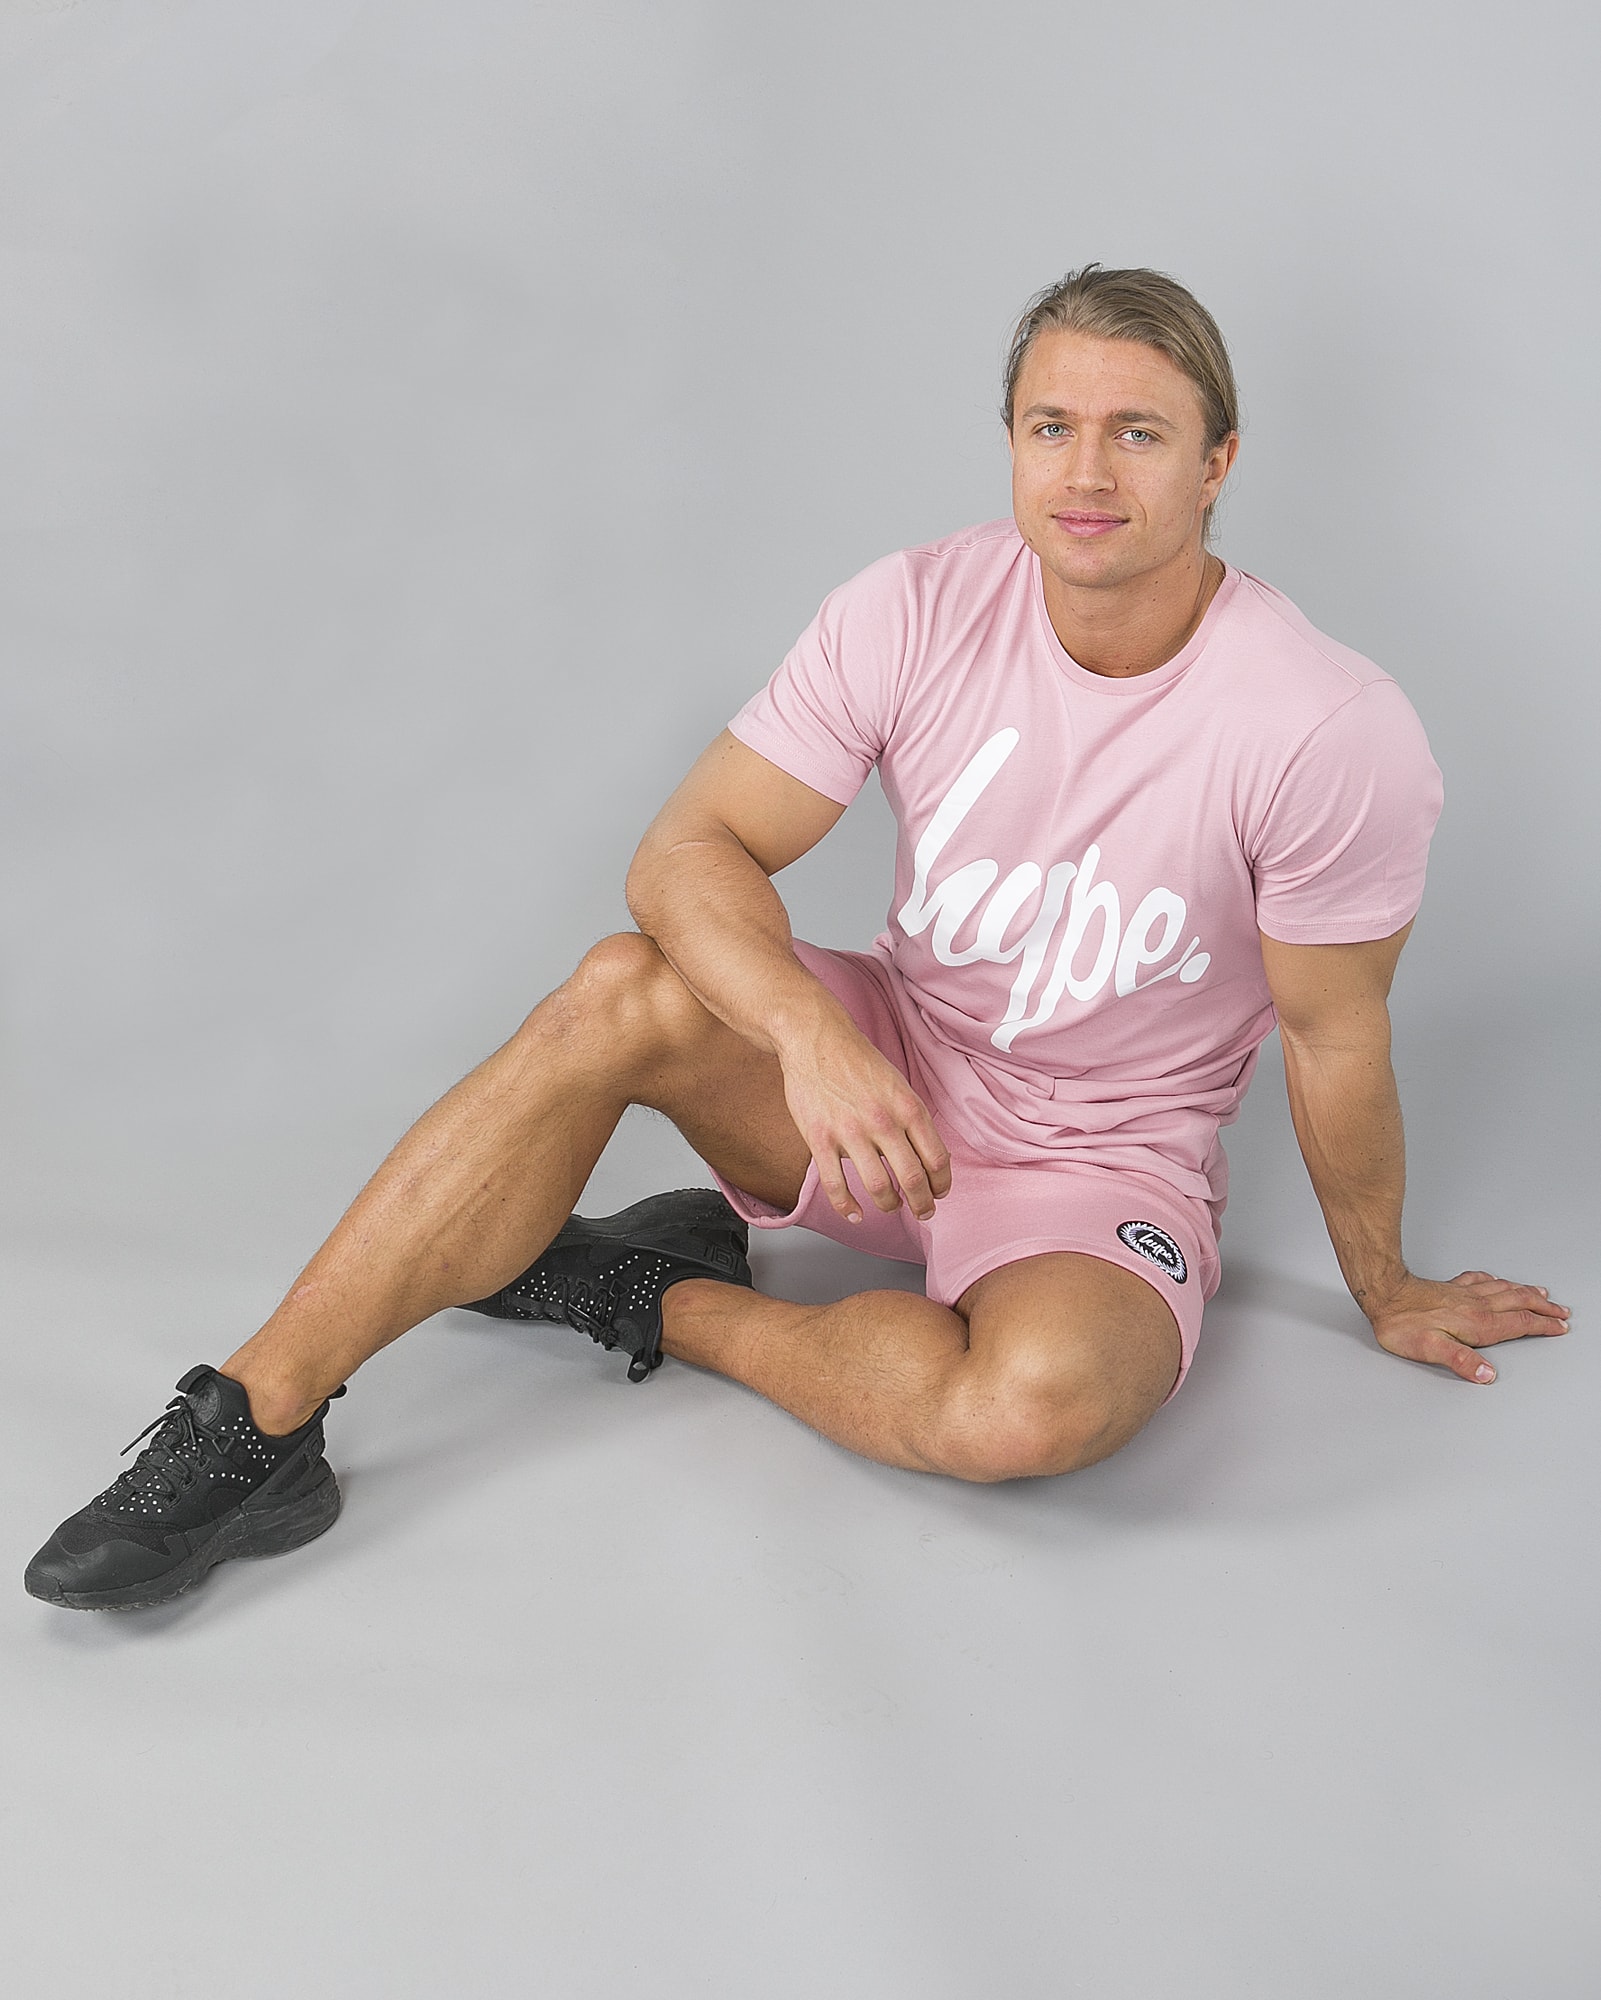 Hype Script T-Shirt Men ss18004 Pink and Crest Shorts ss18330 Pink h